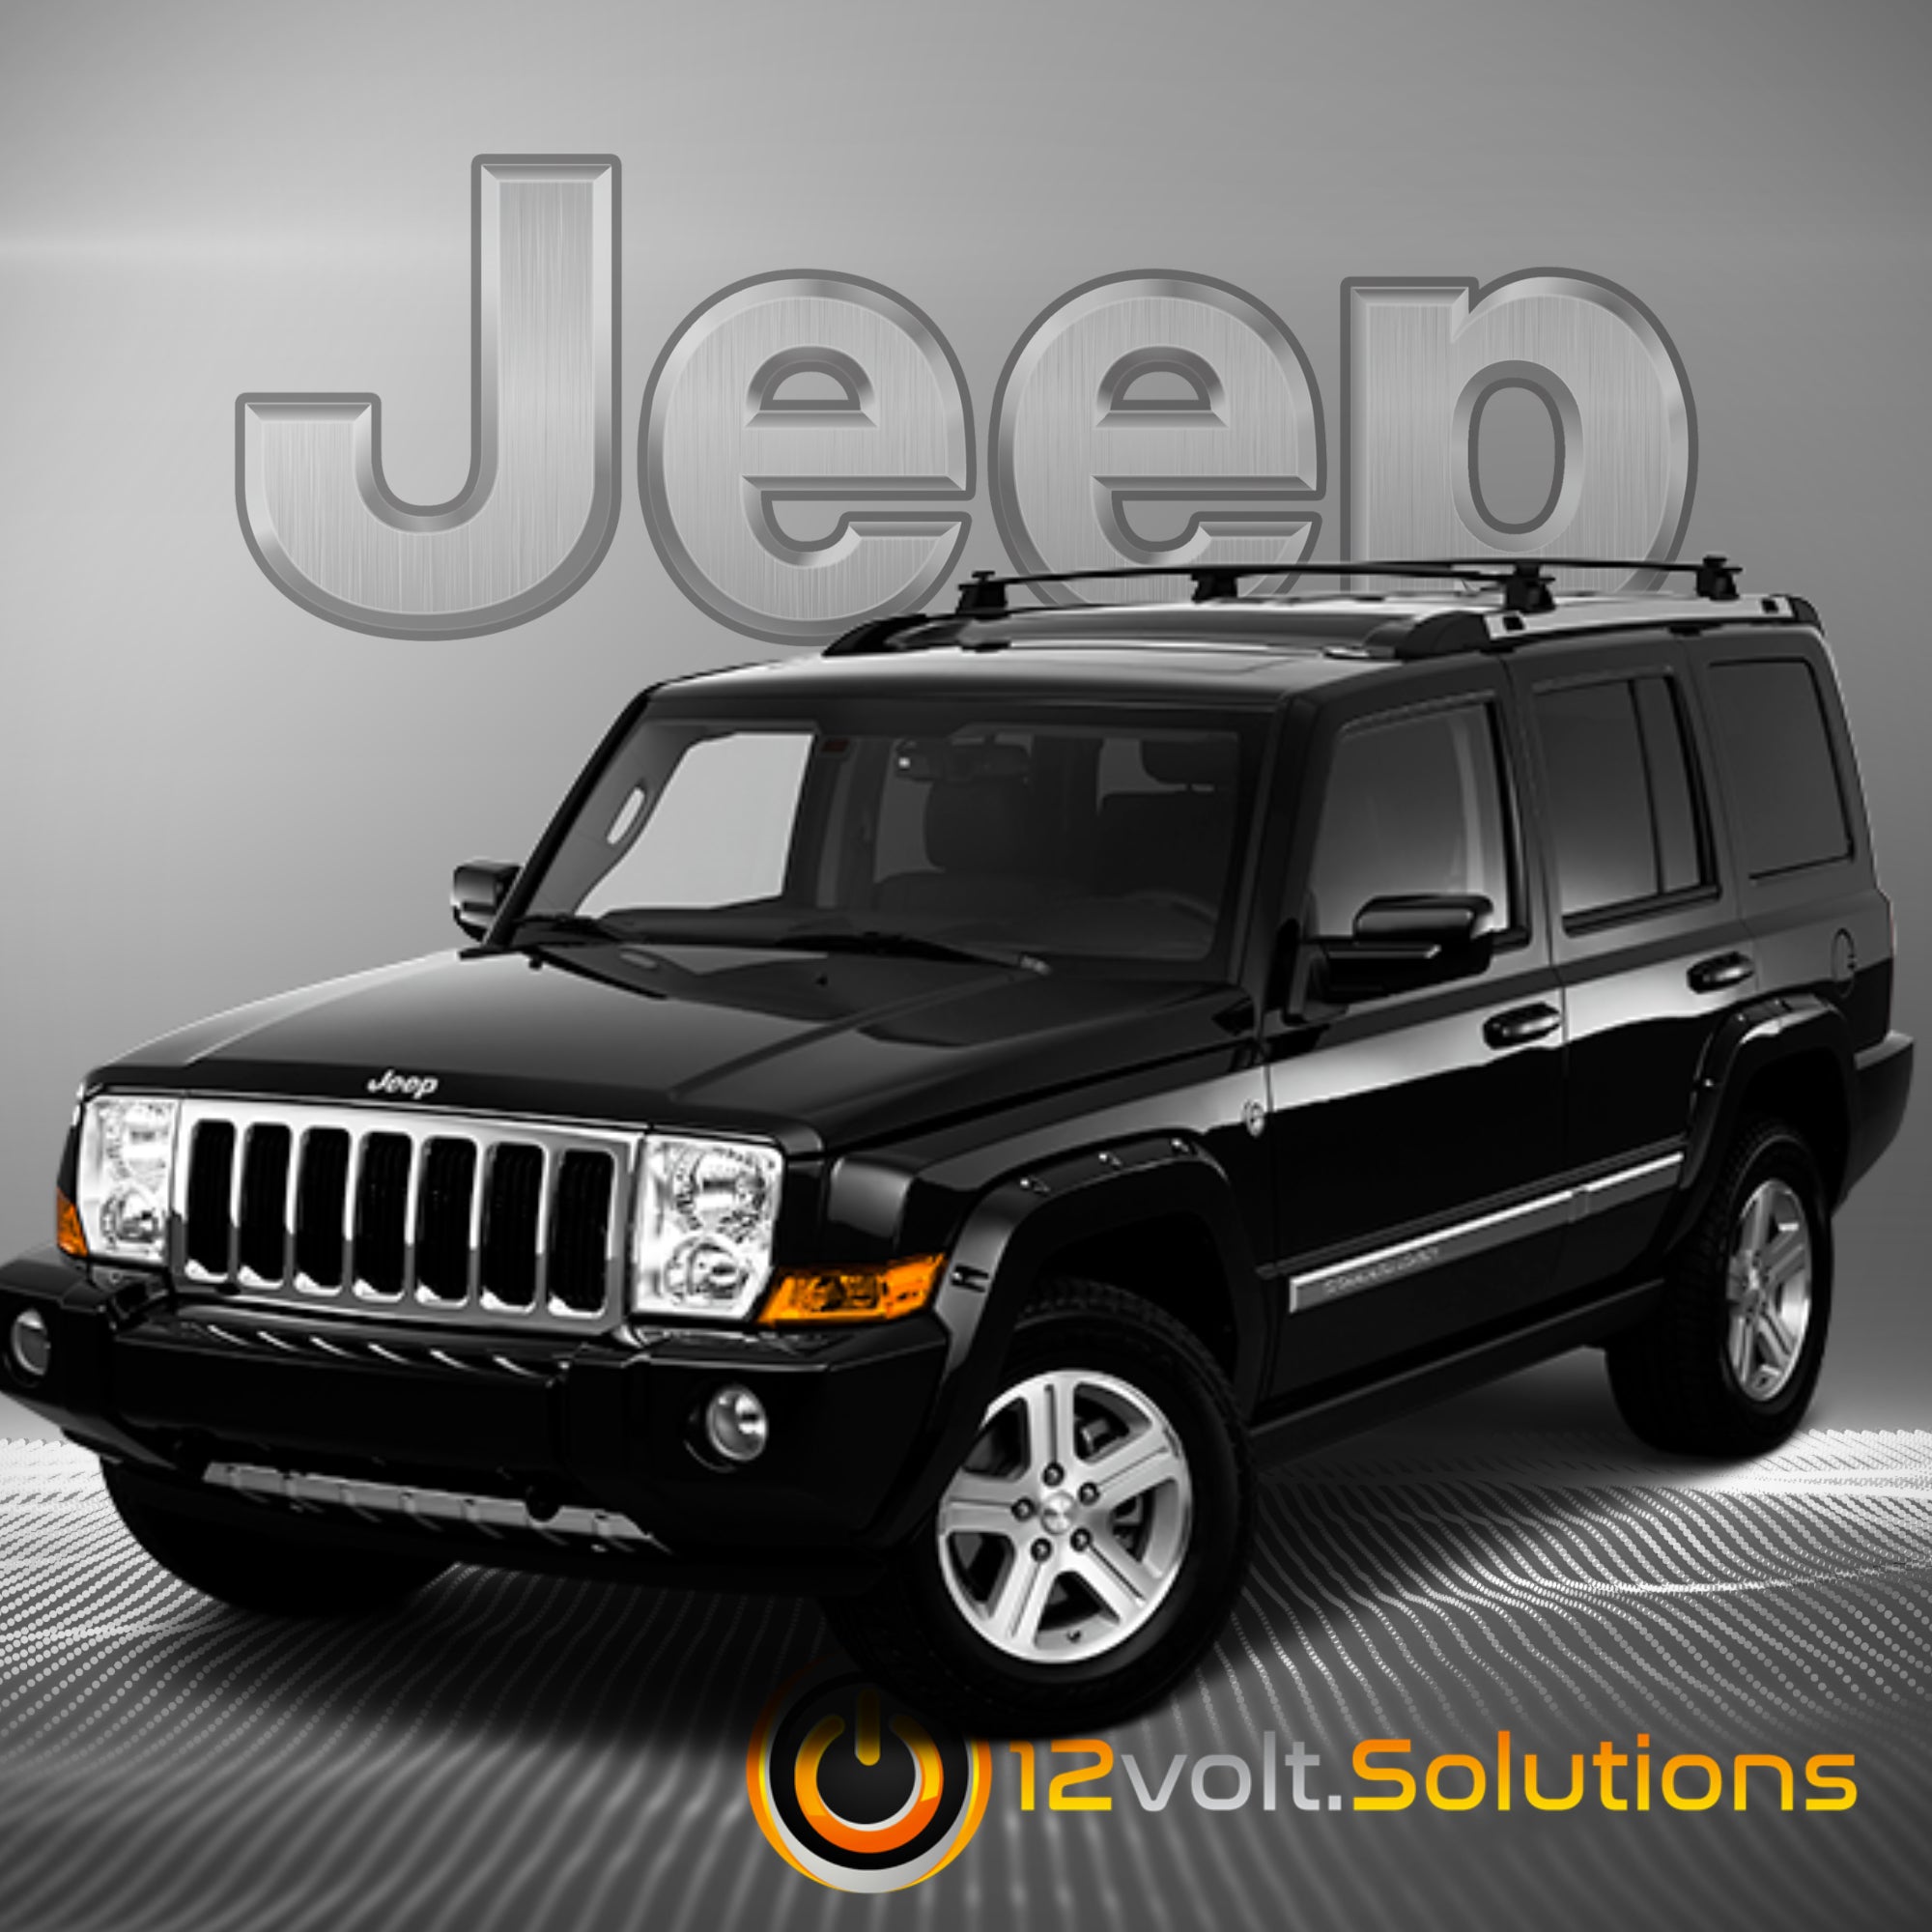 2008-2010 Jeep Commander Plug & Play Remote Start Kit-12Volt.Solutions